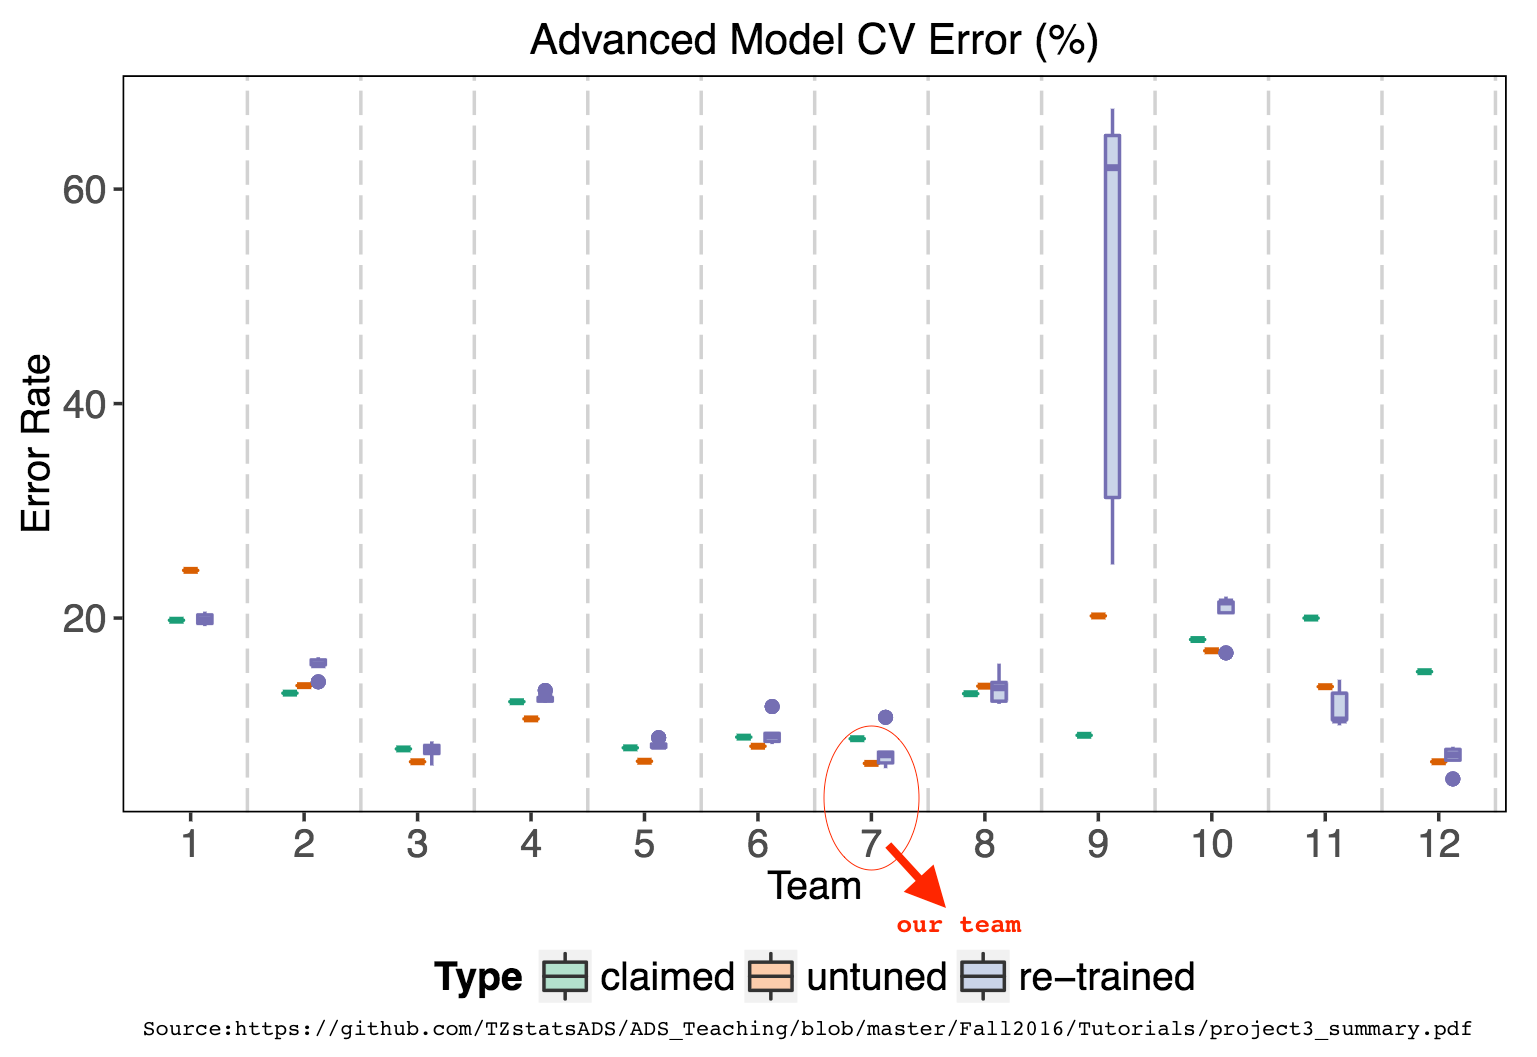 Advanced model error rates comparison across 12 teams